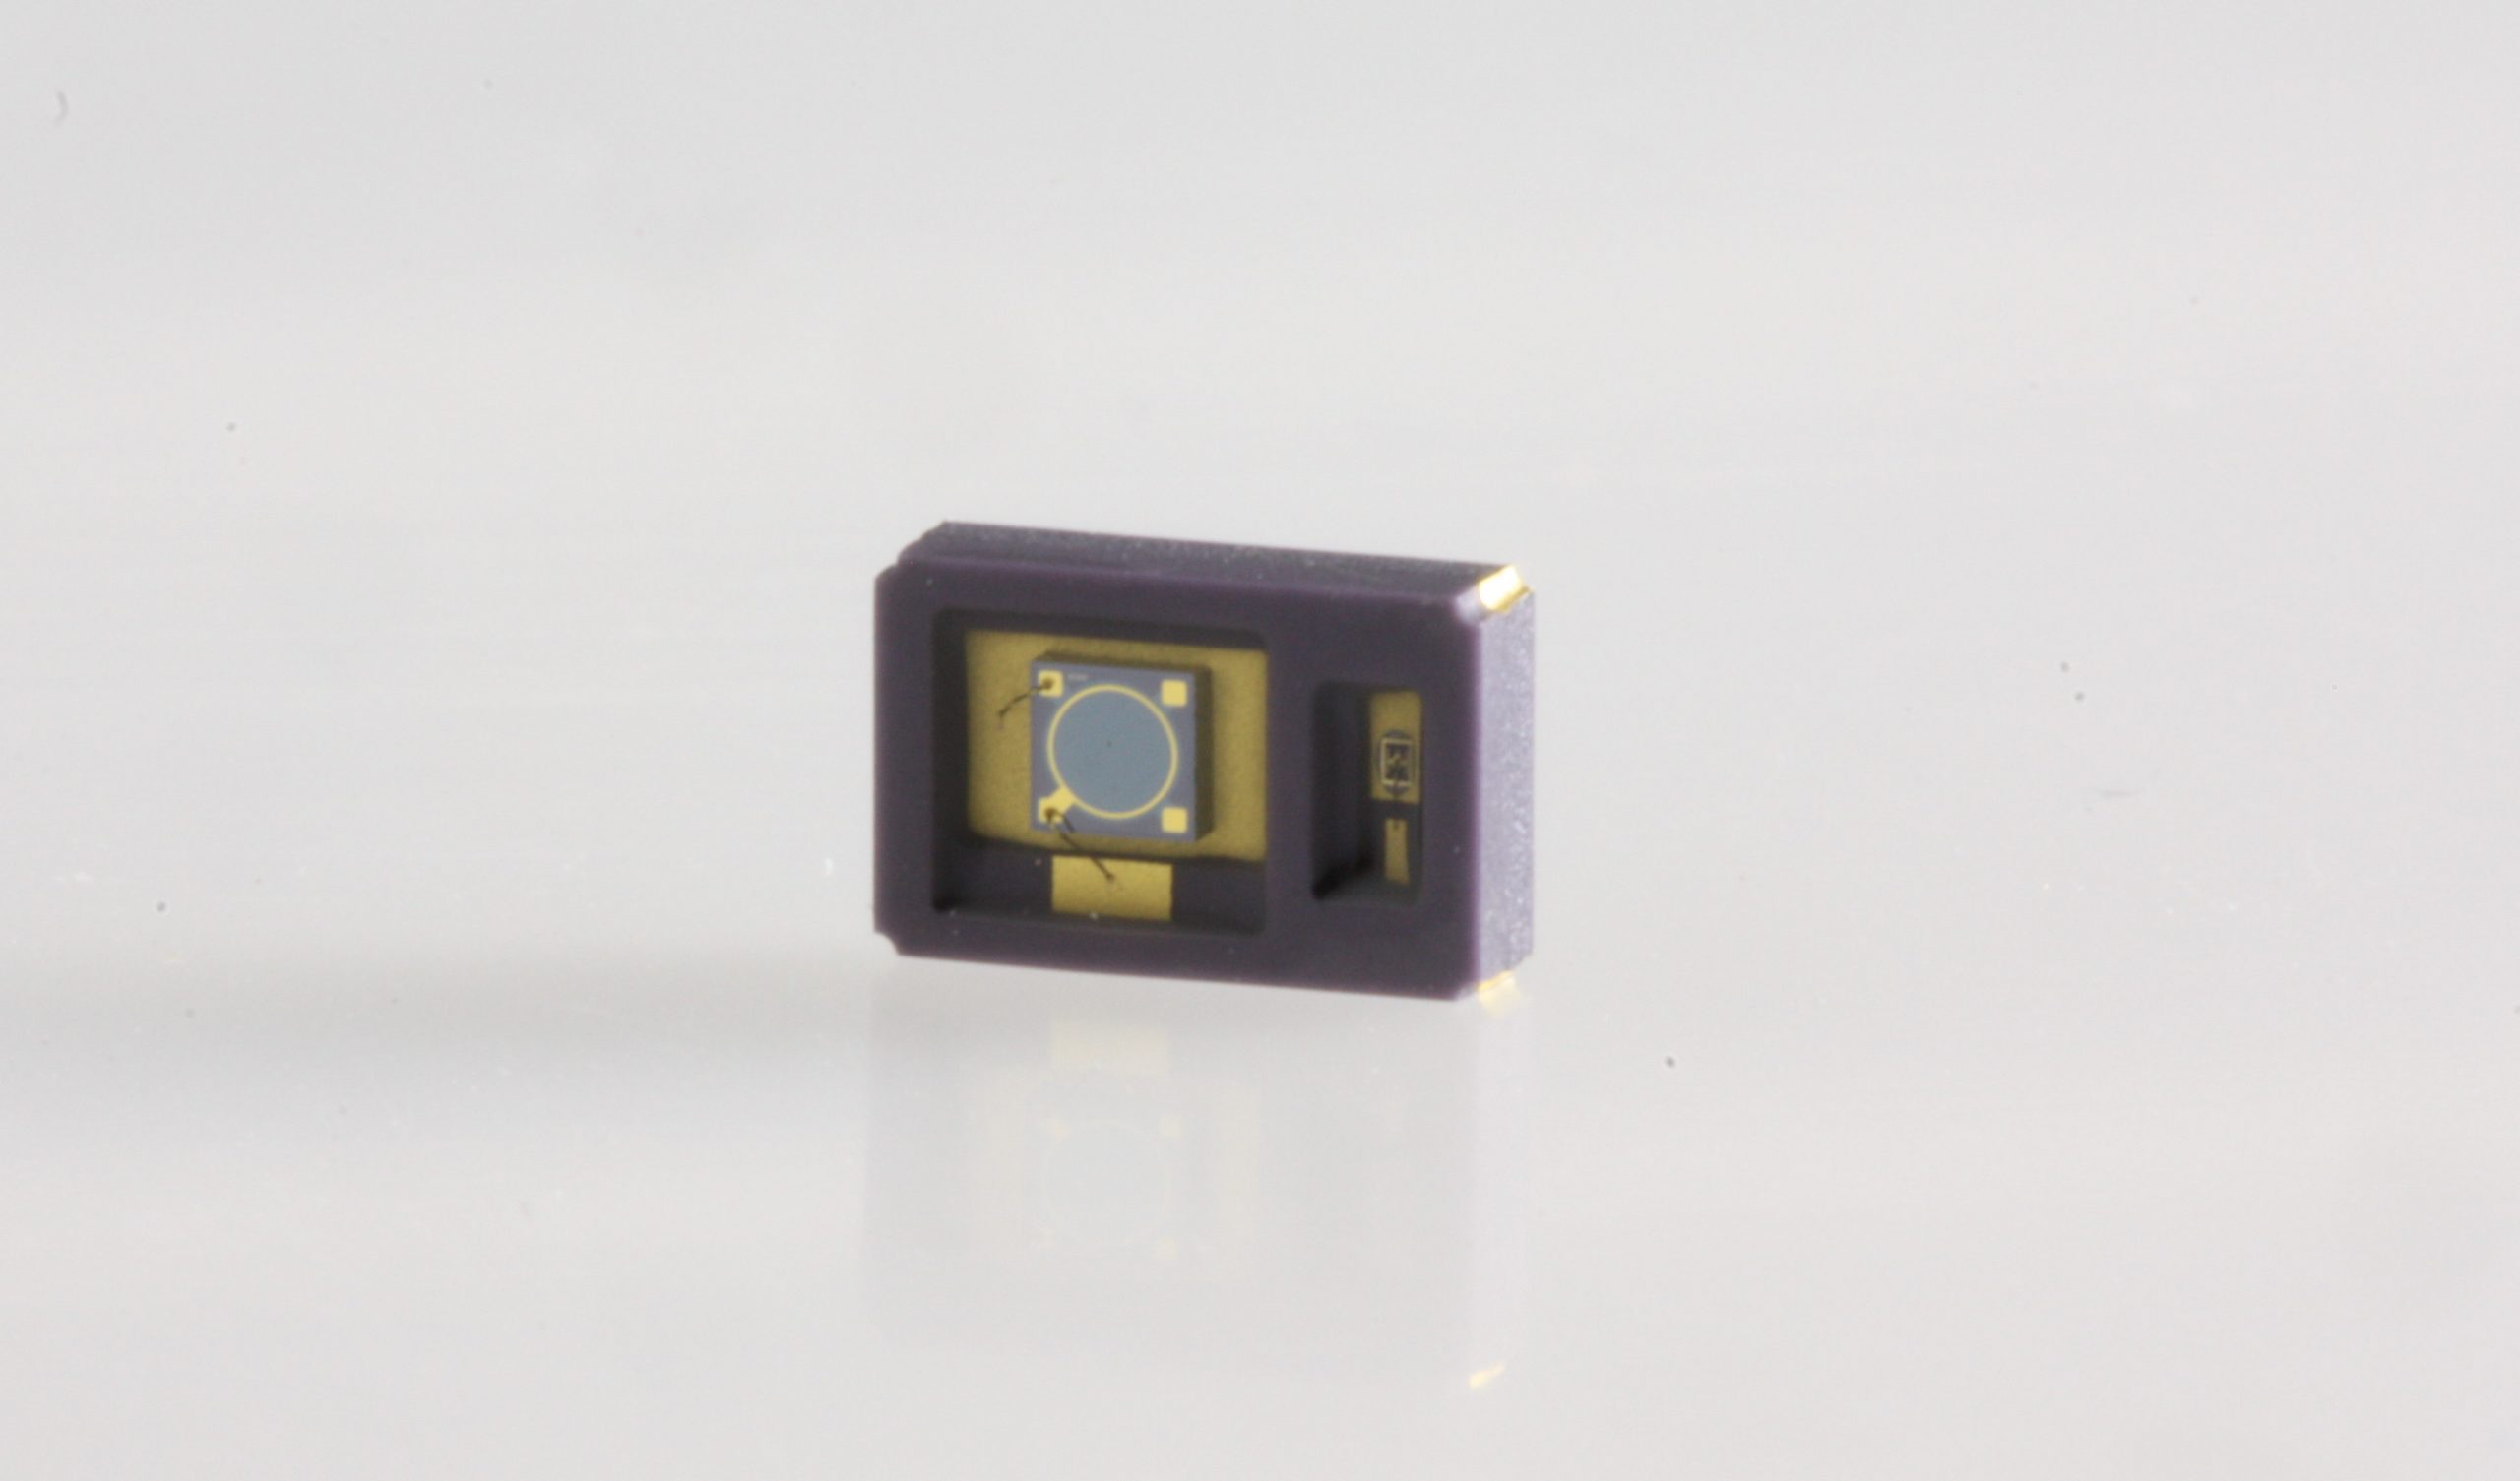 Marktech reflective sensors feature 0.5-1.5mm short detection distance